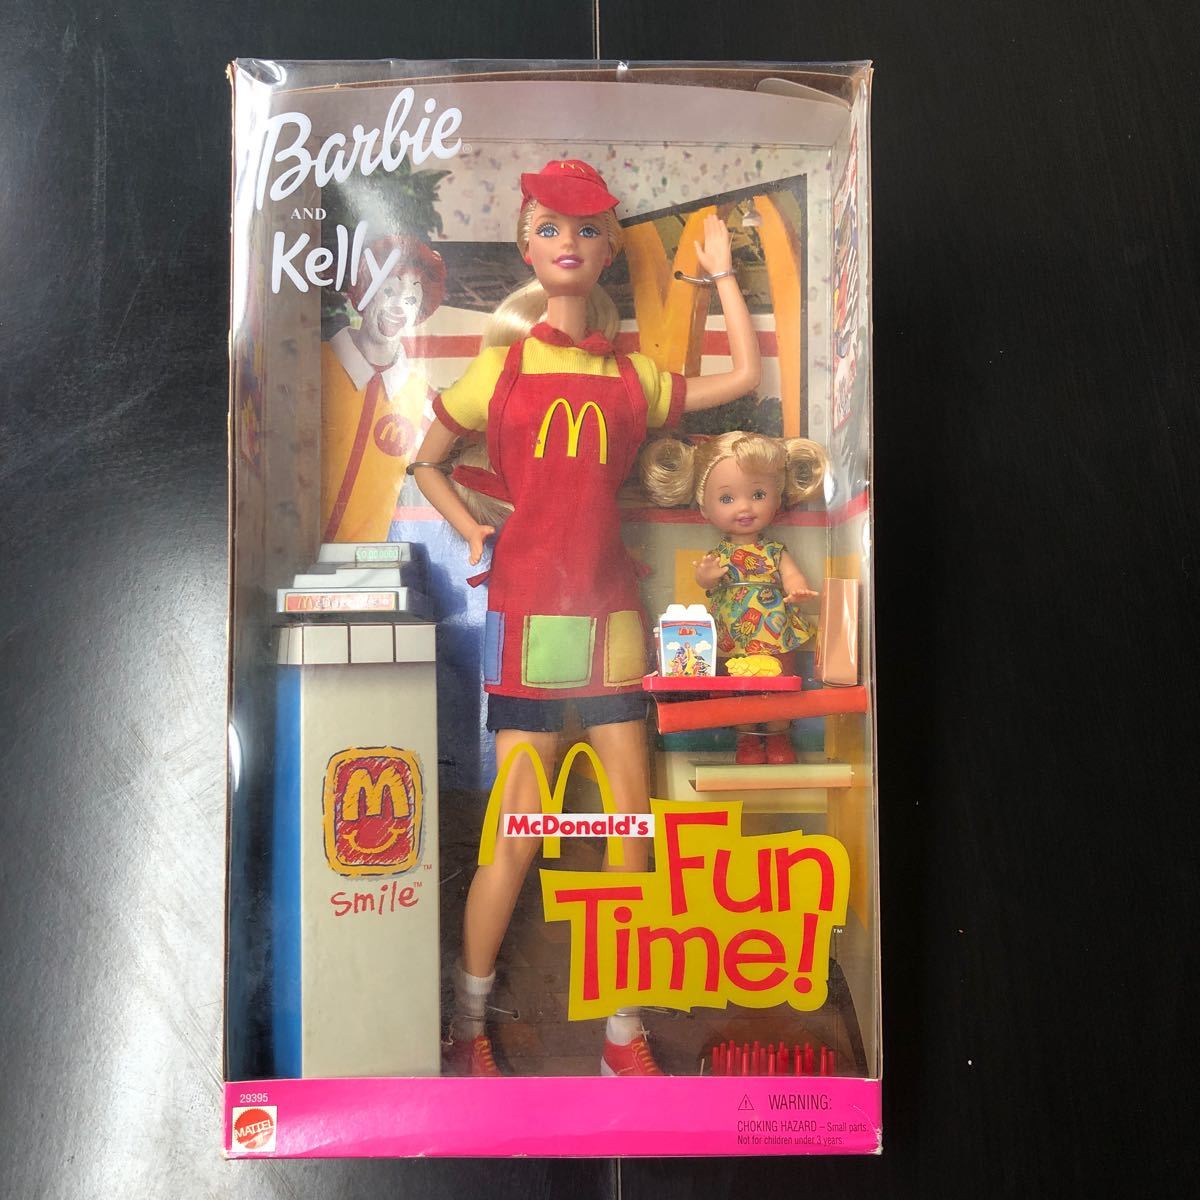 Barbie Barbie and Kelly McDonald\'s McDonald's Fun Time! Dolls Set 2001 doll doll figi